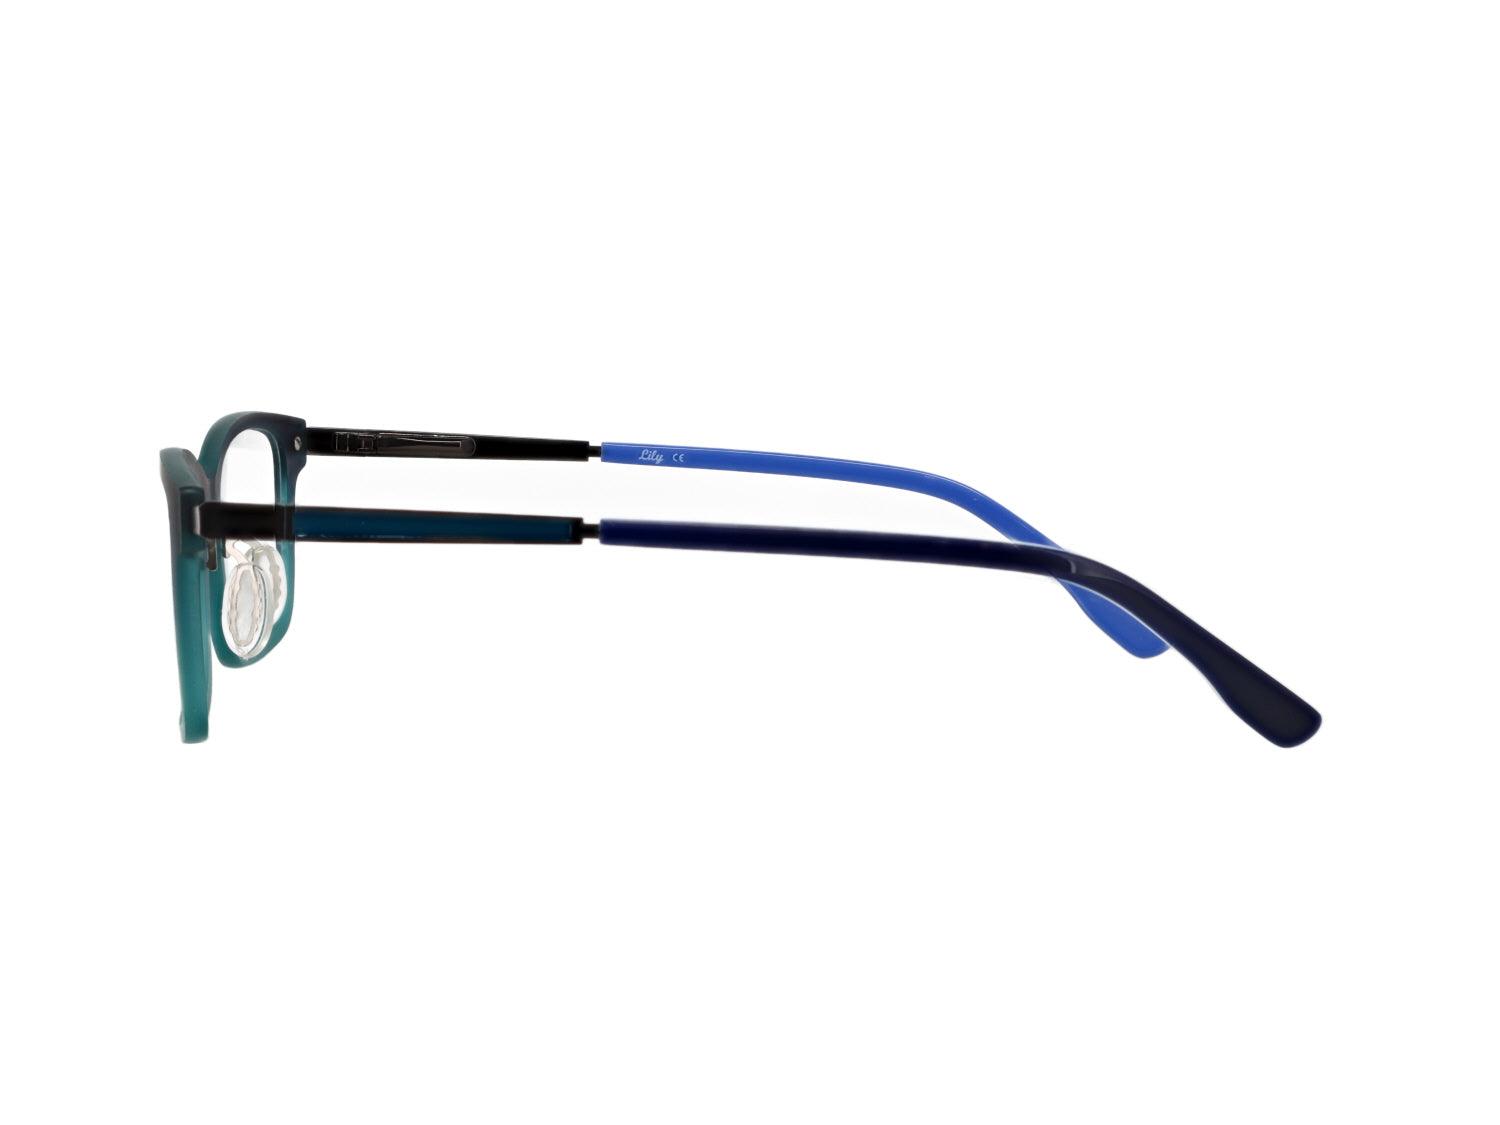 Lily Eyeglasses, 1349 C1 - Vision 770